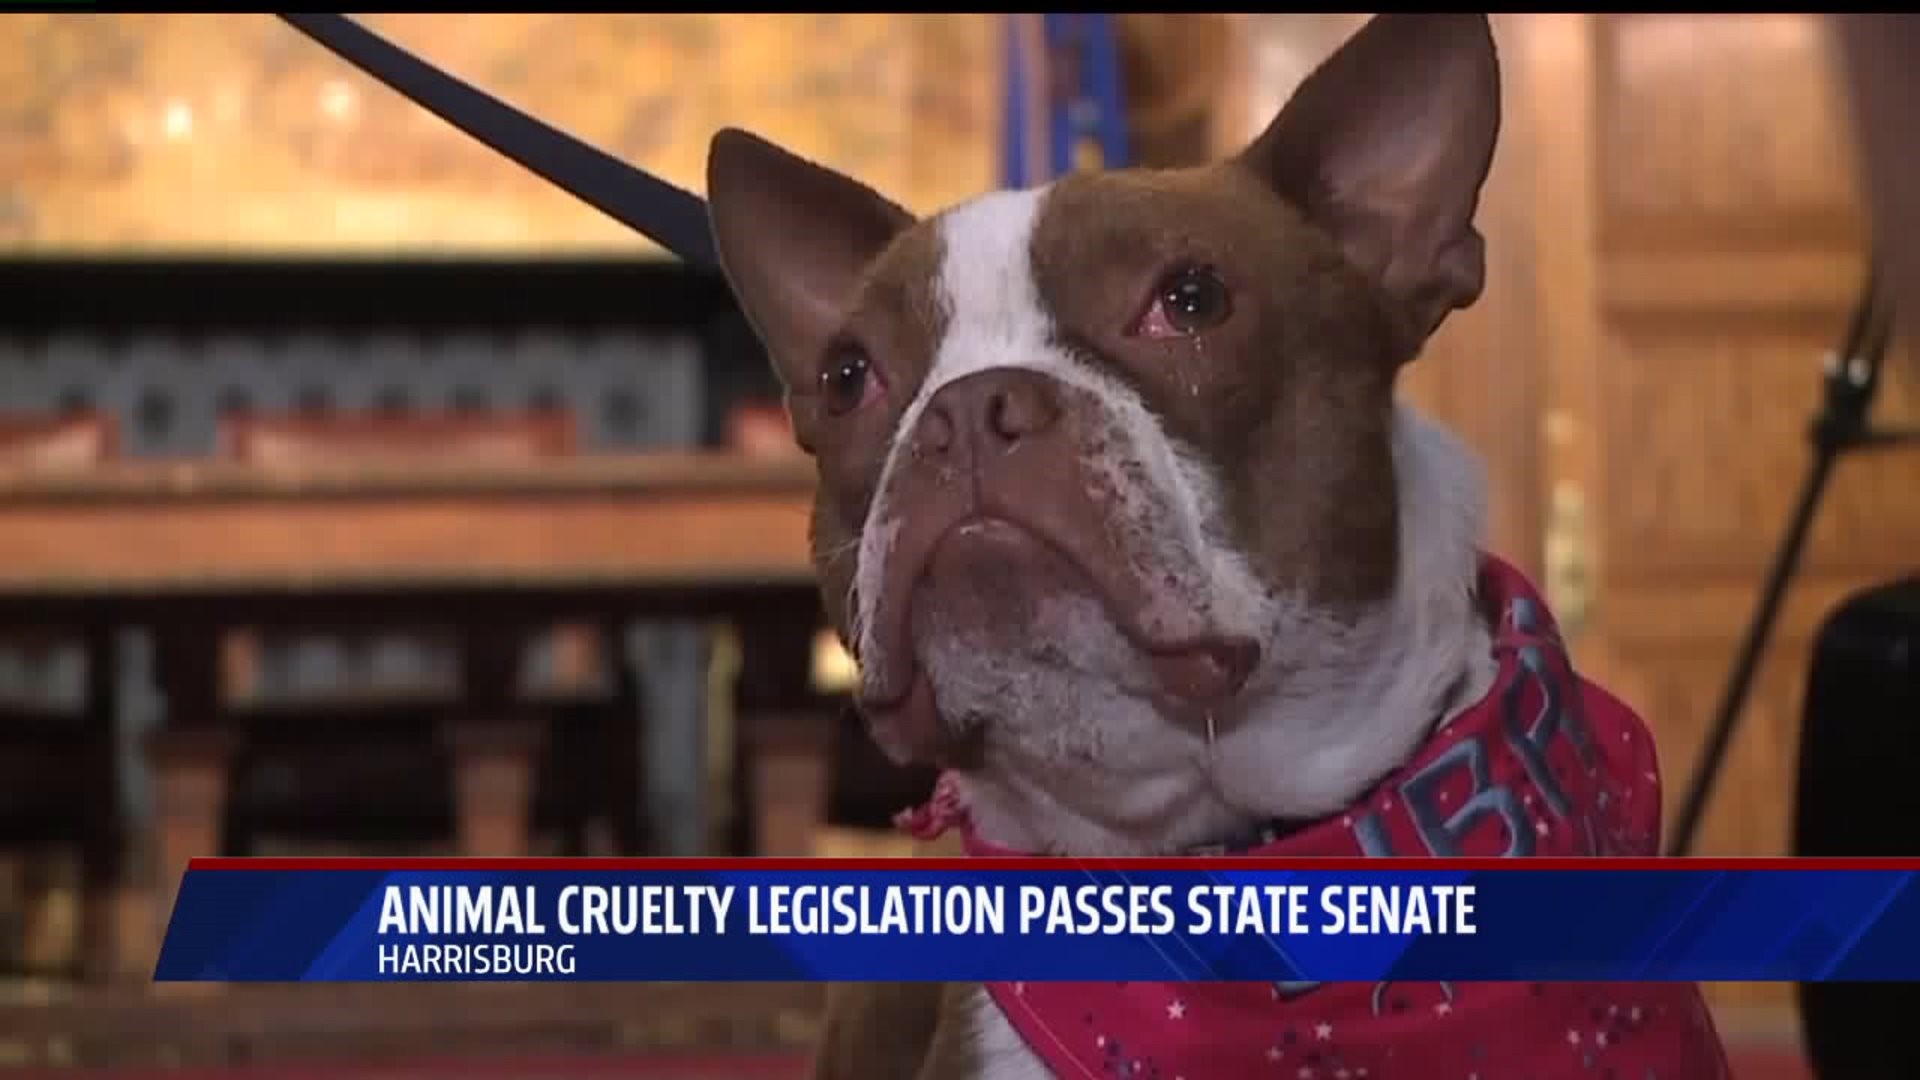 Animal cruelty legislation passes state senate